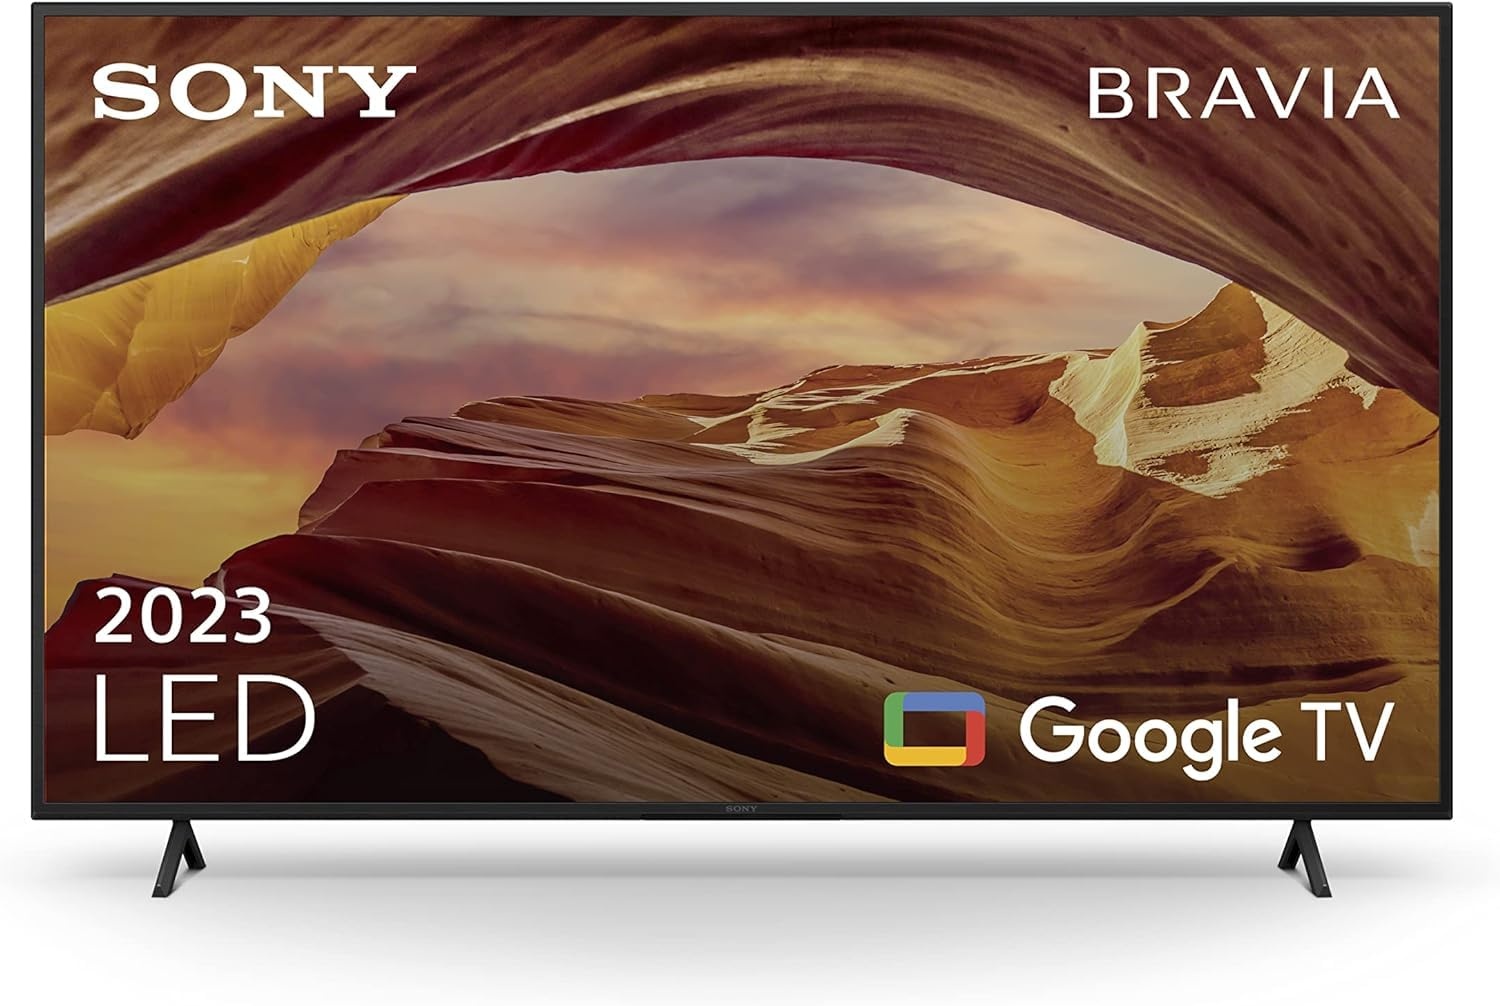 Sony BRAVIA, KD-65X75WL, 65 Zoll Fernseher, LED, 4K HDR, Google TV, Smart TV, Works with Alexa, BRAVIA CORE, HDMI 2.1, Gaming-Menü mit ALLM